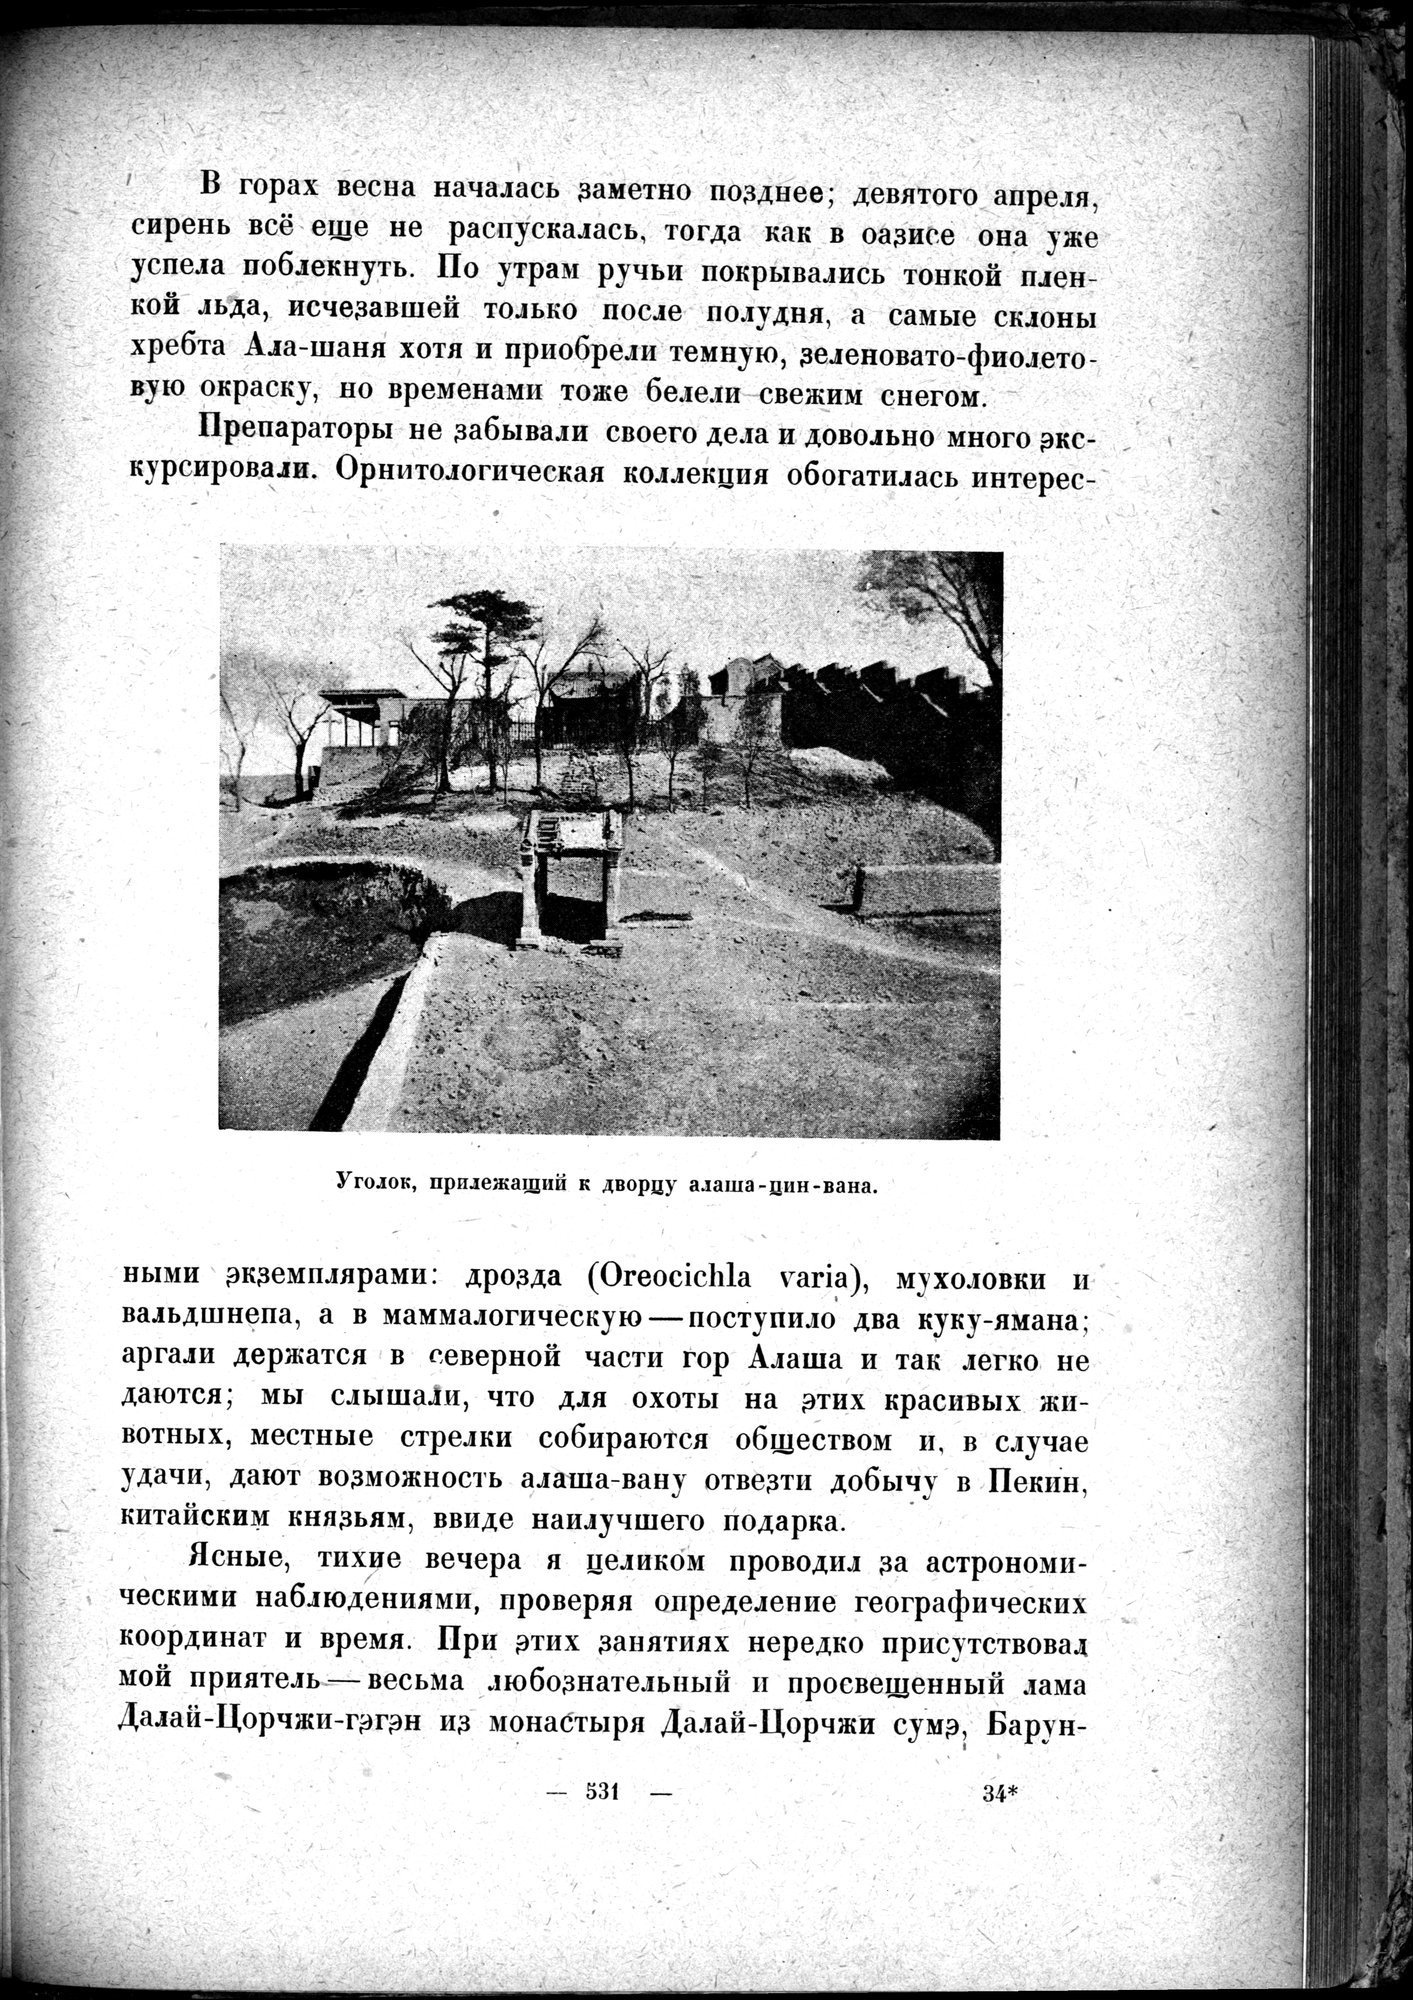 Mongoliya i Amdo i mertby gorod Khara-Khoto : vol.1 / Page 615 (Grayscale High Resolution Image)